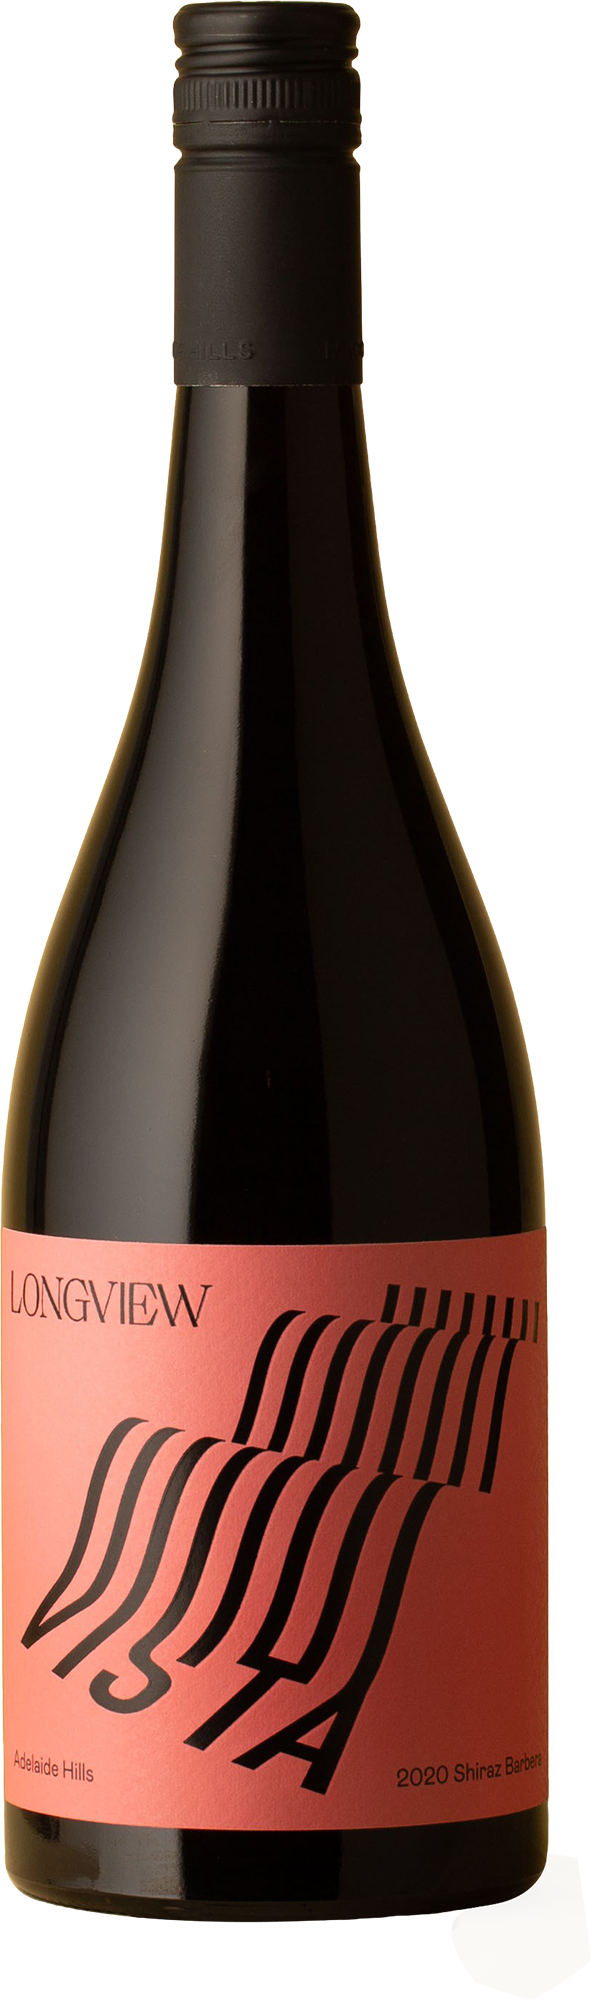 Longview - Vista Shiraz / Barbera 2020 Red Wine